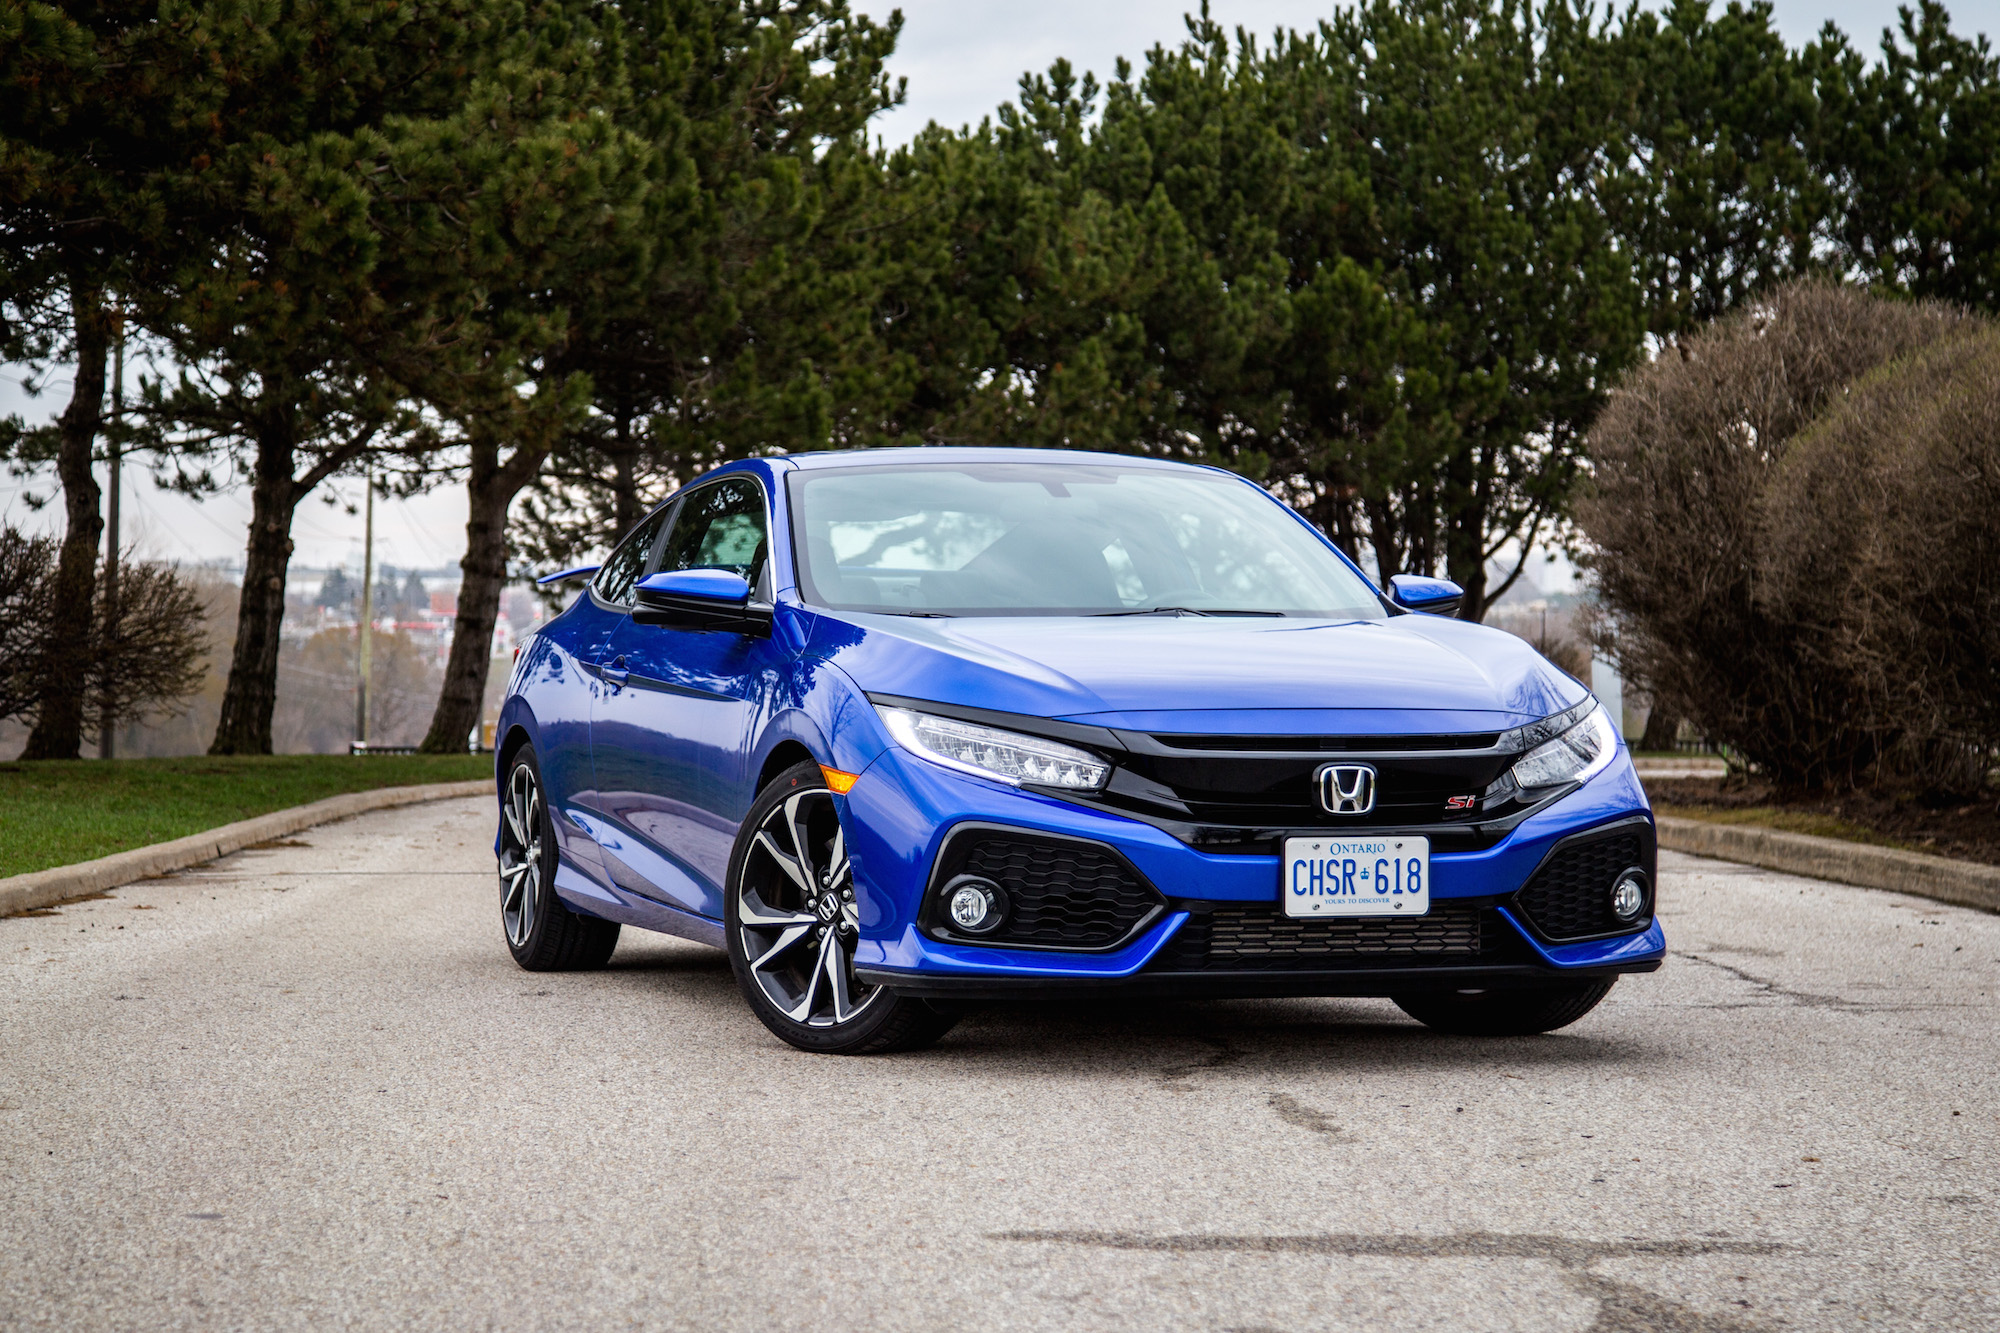 Review: 2019 Honda Civic Si Coupe | CAR